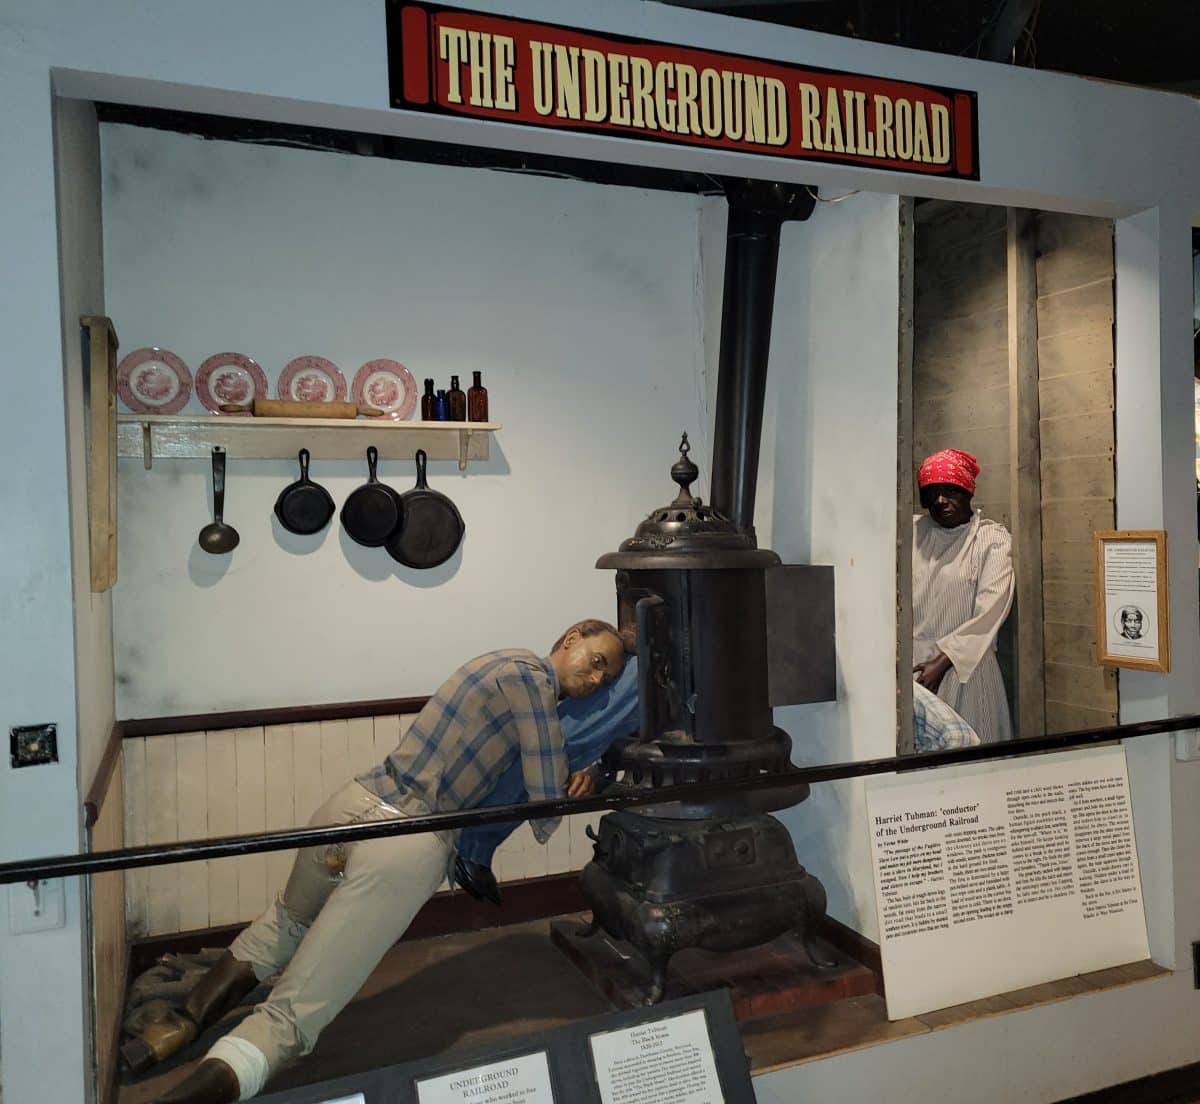 Harriet Tubman "Conductor" of the Underground Railroad